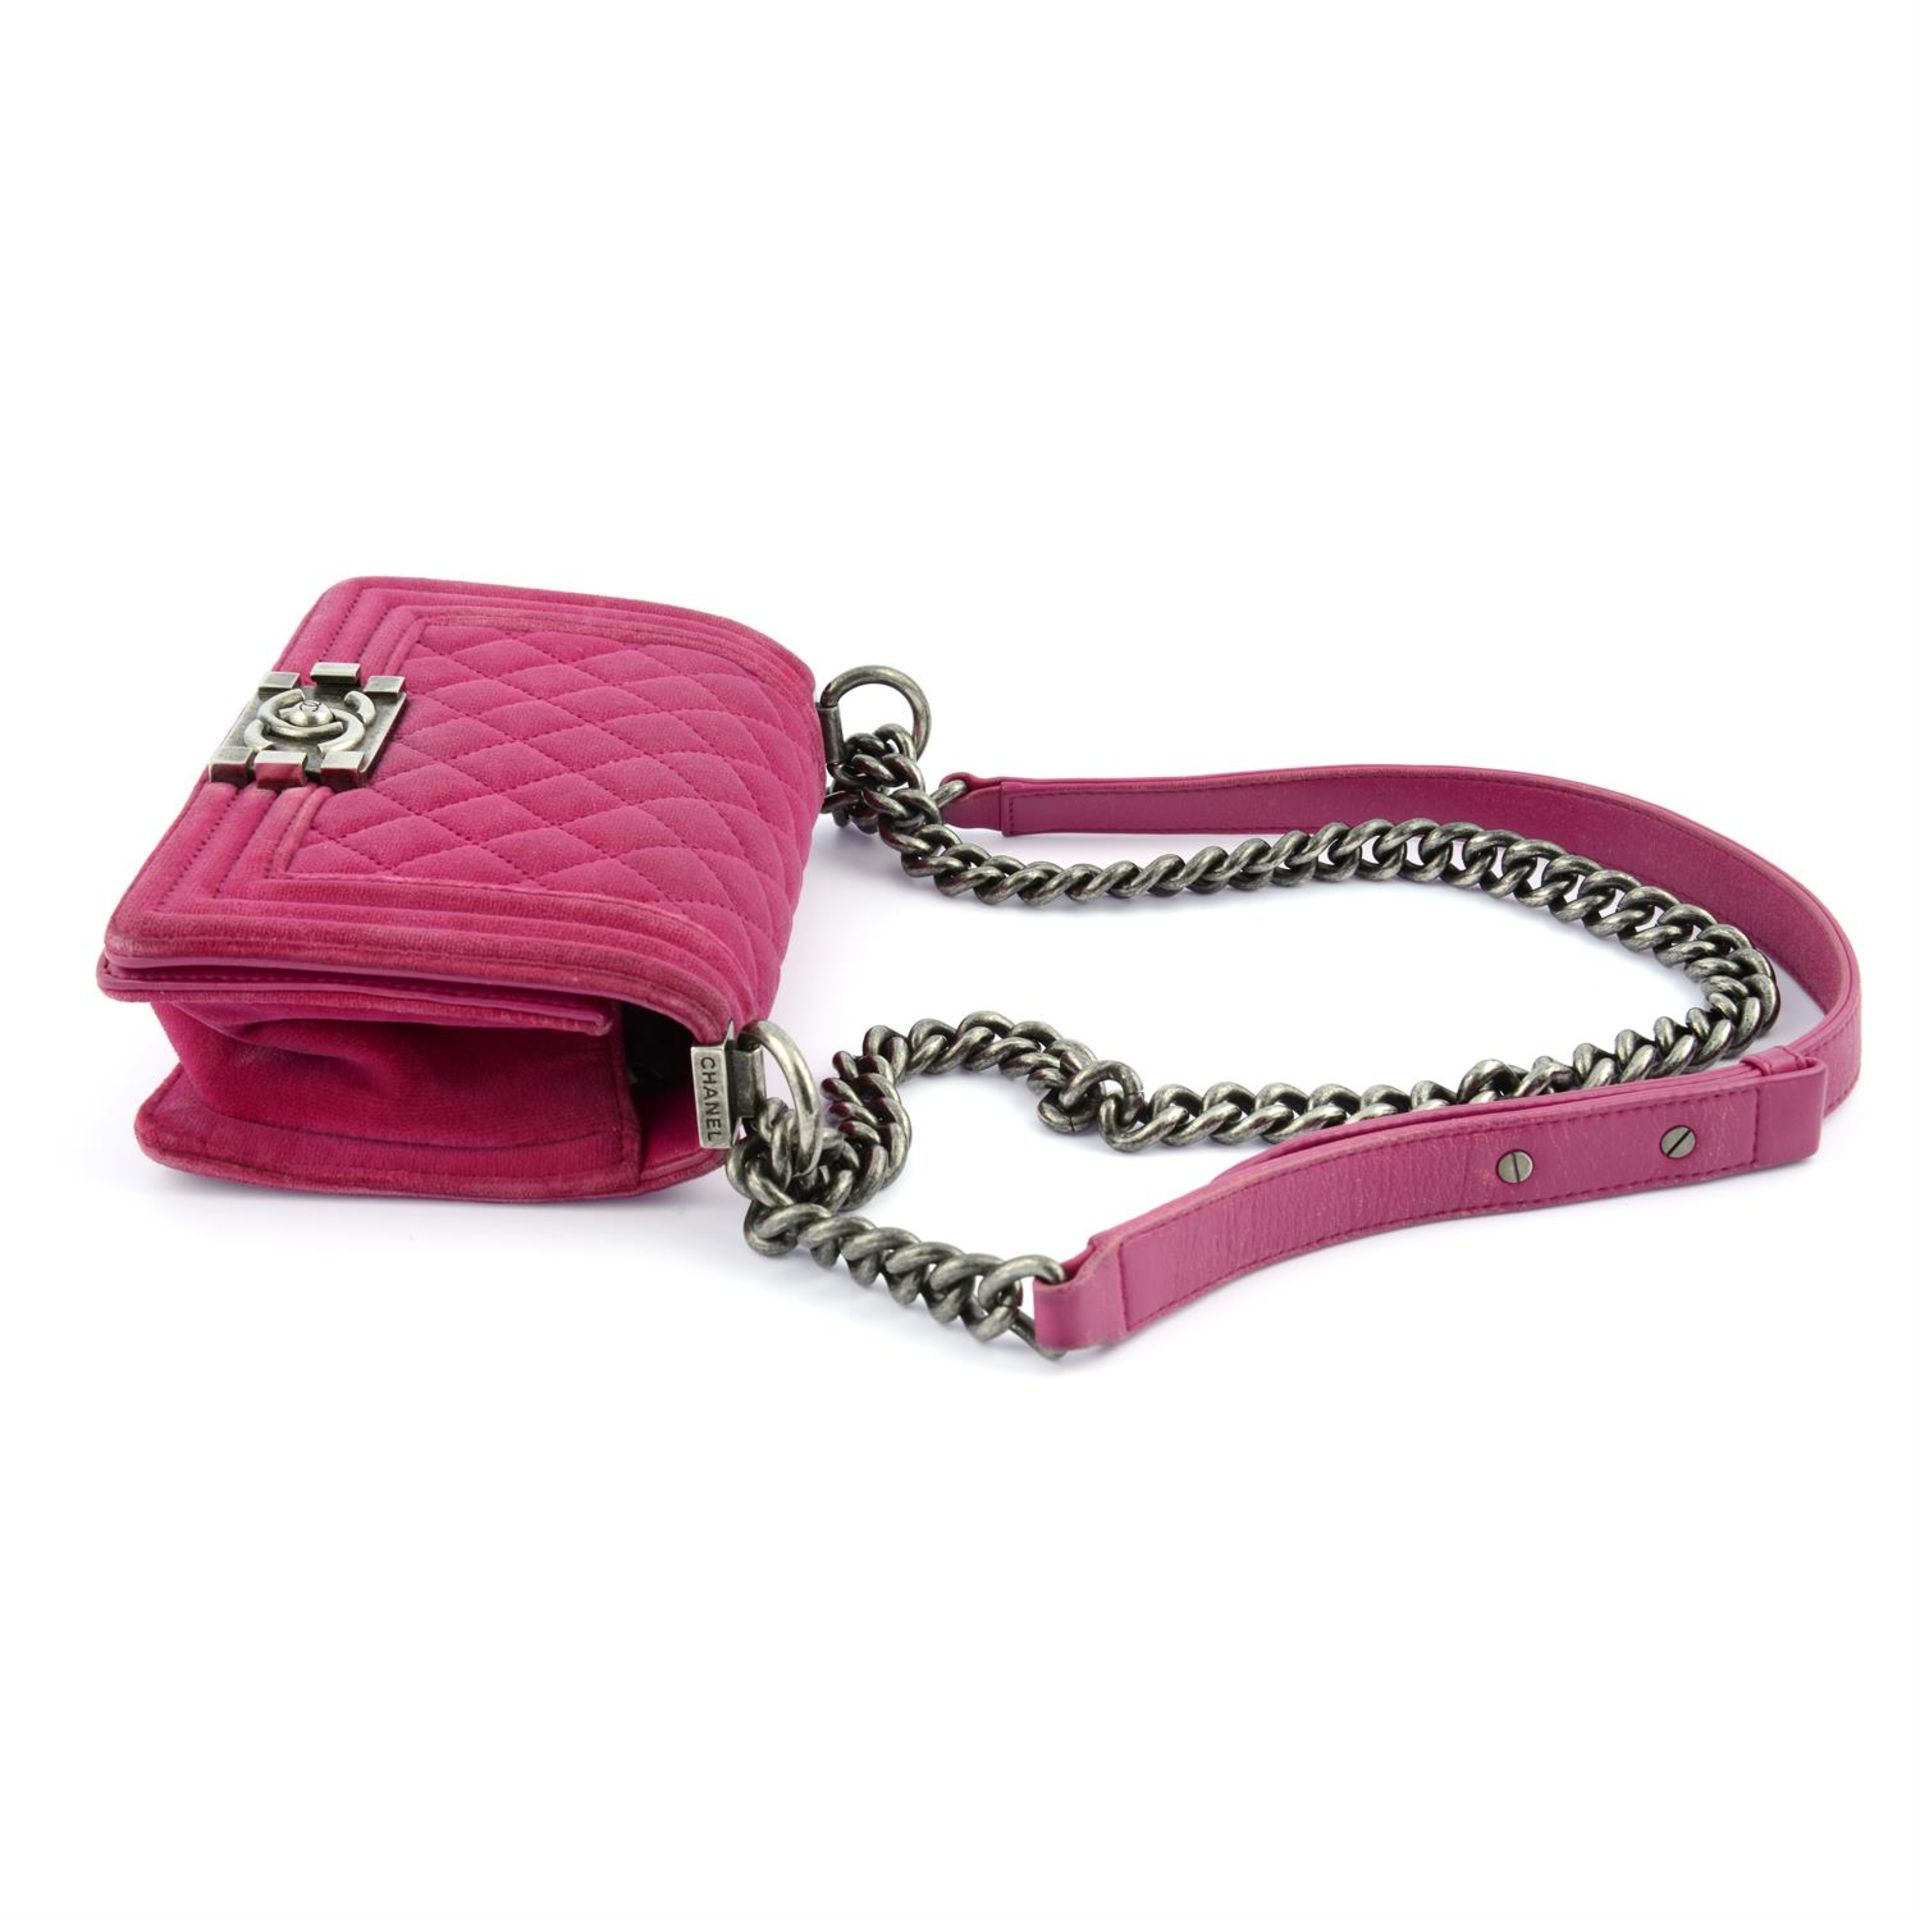 CHANEL - a pink velvet small Boy handbag. - Image 3 of 7